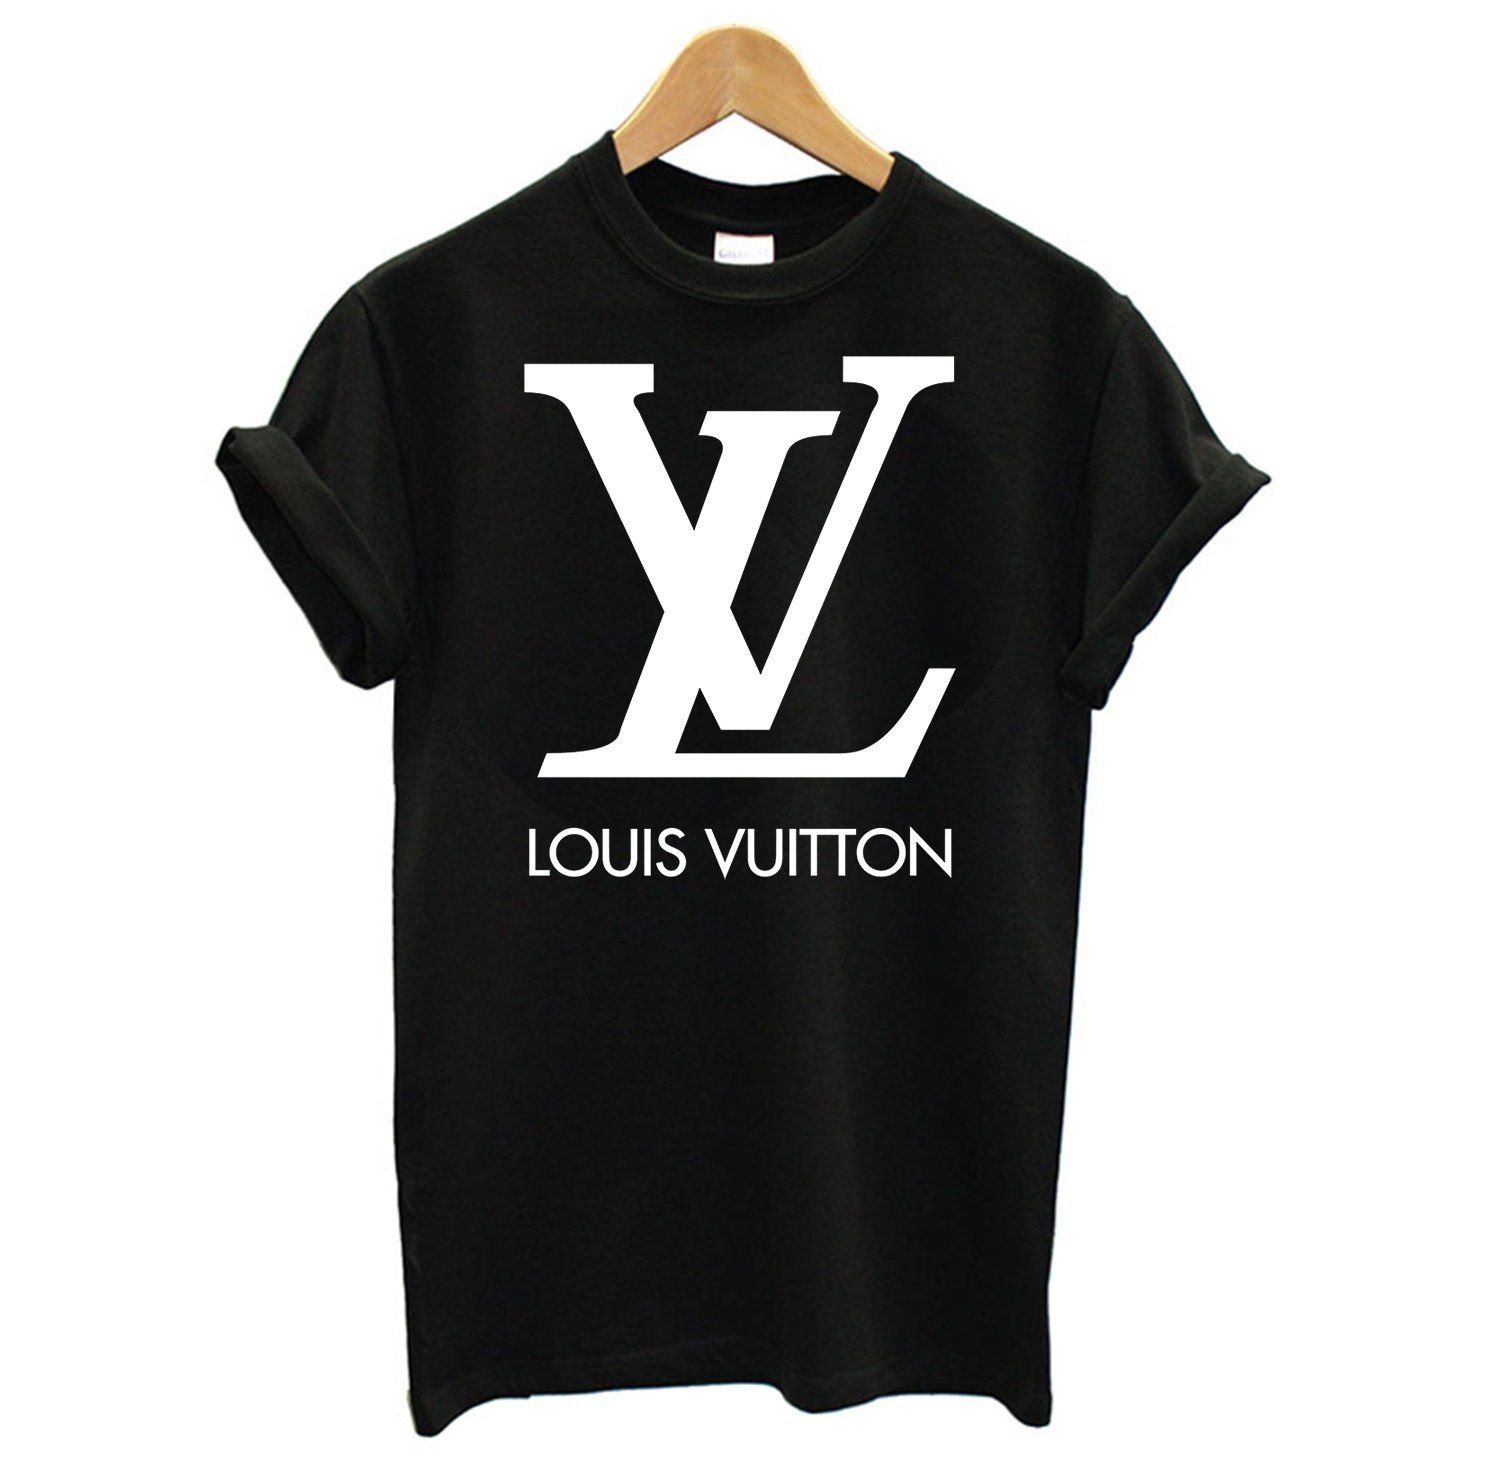 Луи виттон футболки мужские. Луи Виттон футболка мужская. Майка Луи Виттон мужские. Футболка Louis Vuitton мужская черная. Лувитон футболка.